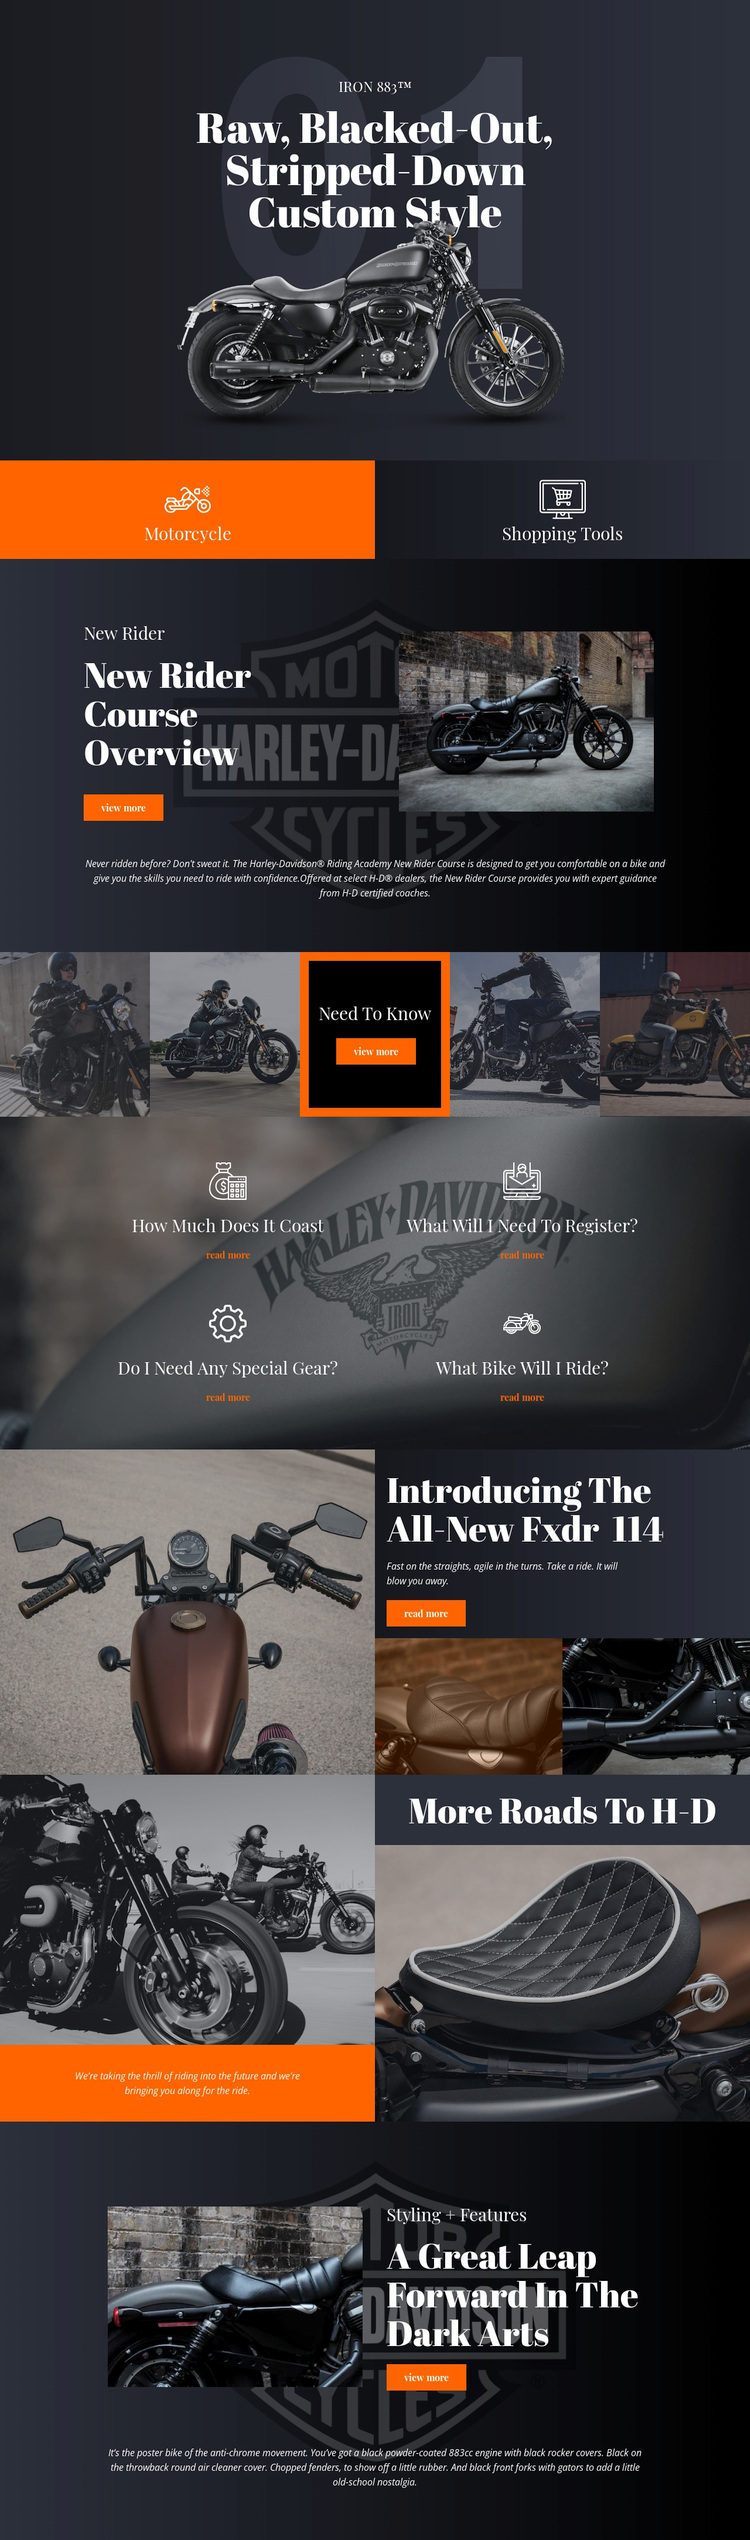 Harley Davidson Template